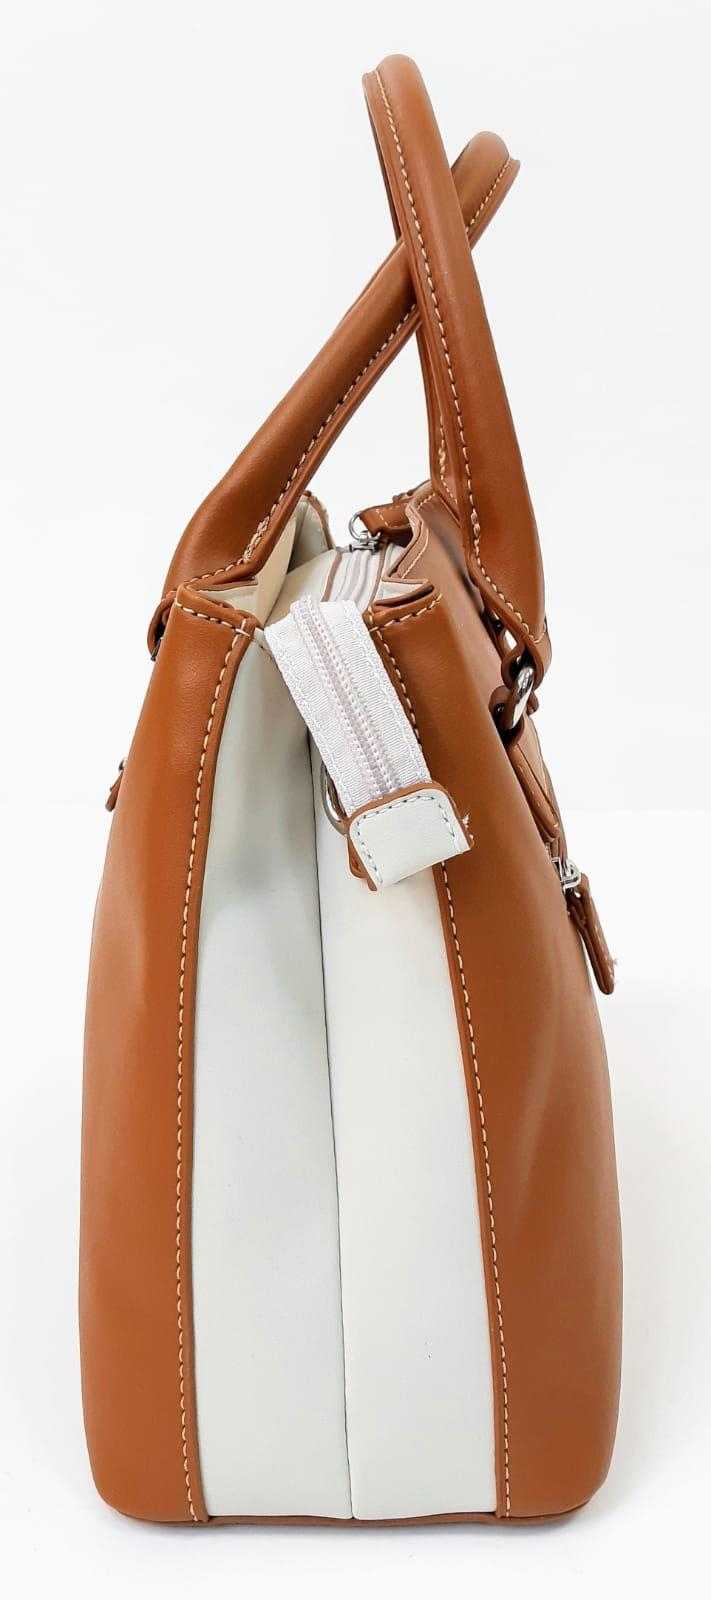 An Unused French, David Jones Paris, Tan Leather Handbag 30x37cm. Comes with Shoulder Strap. - Image 4 of 5